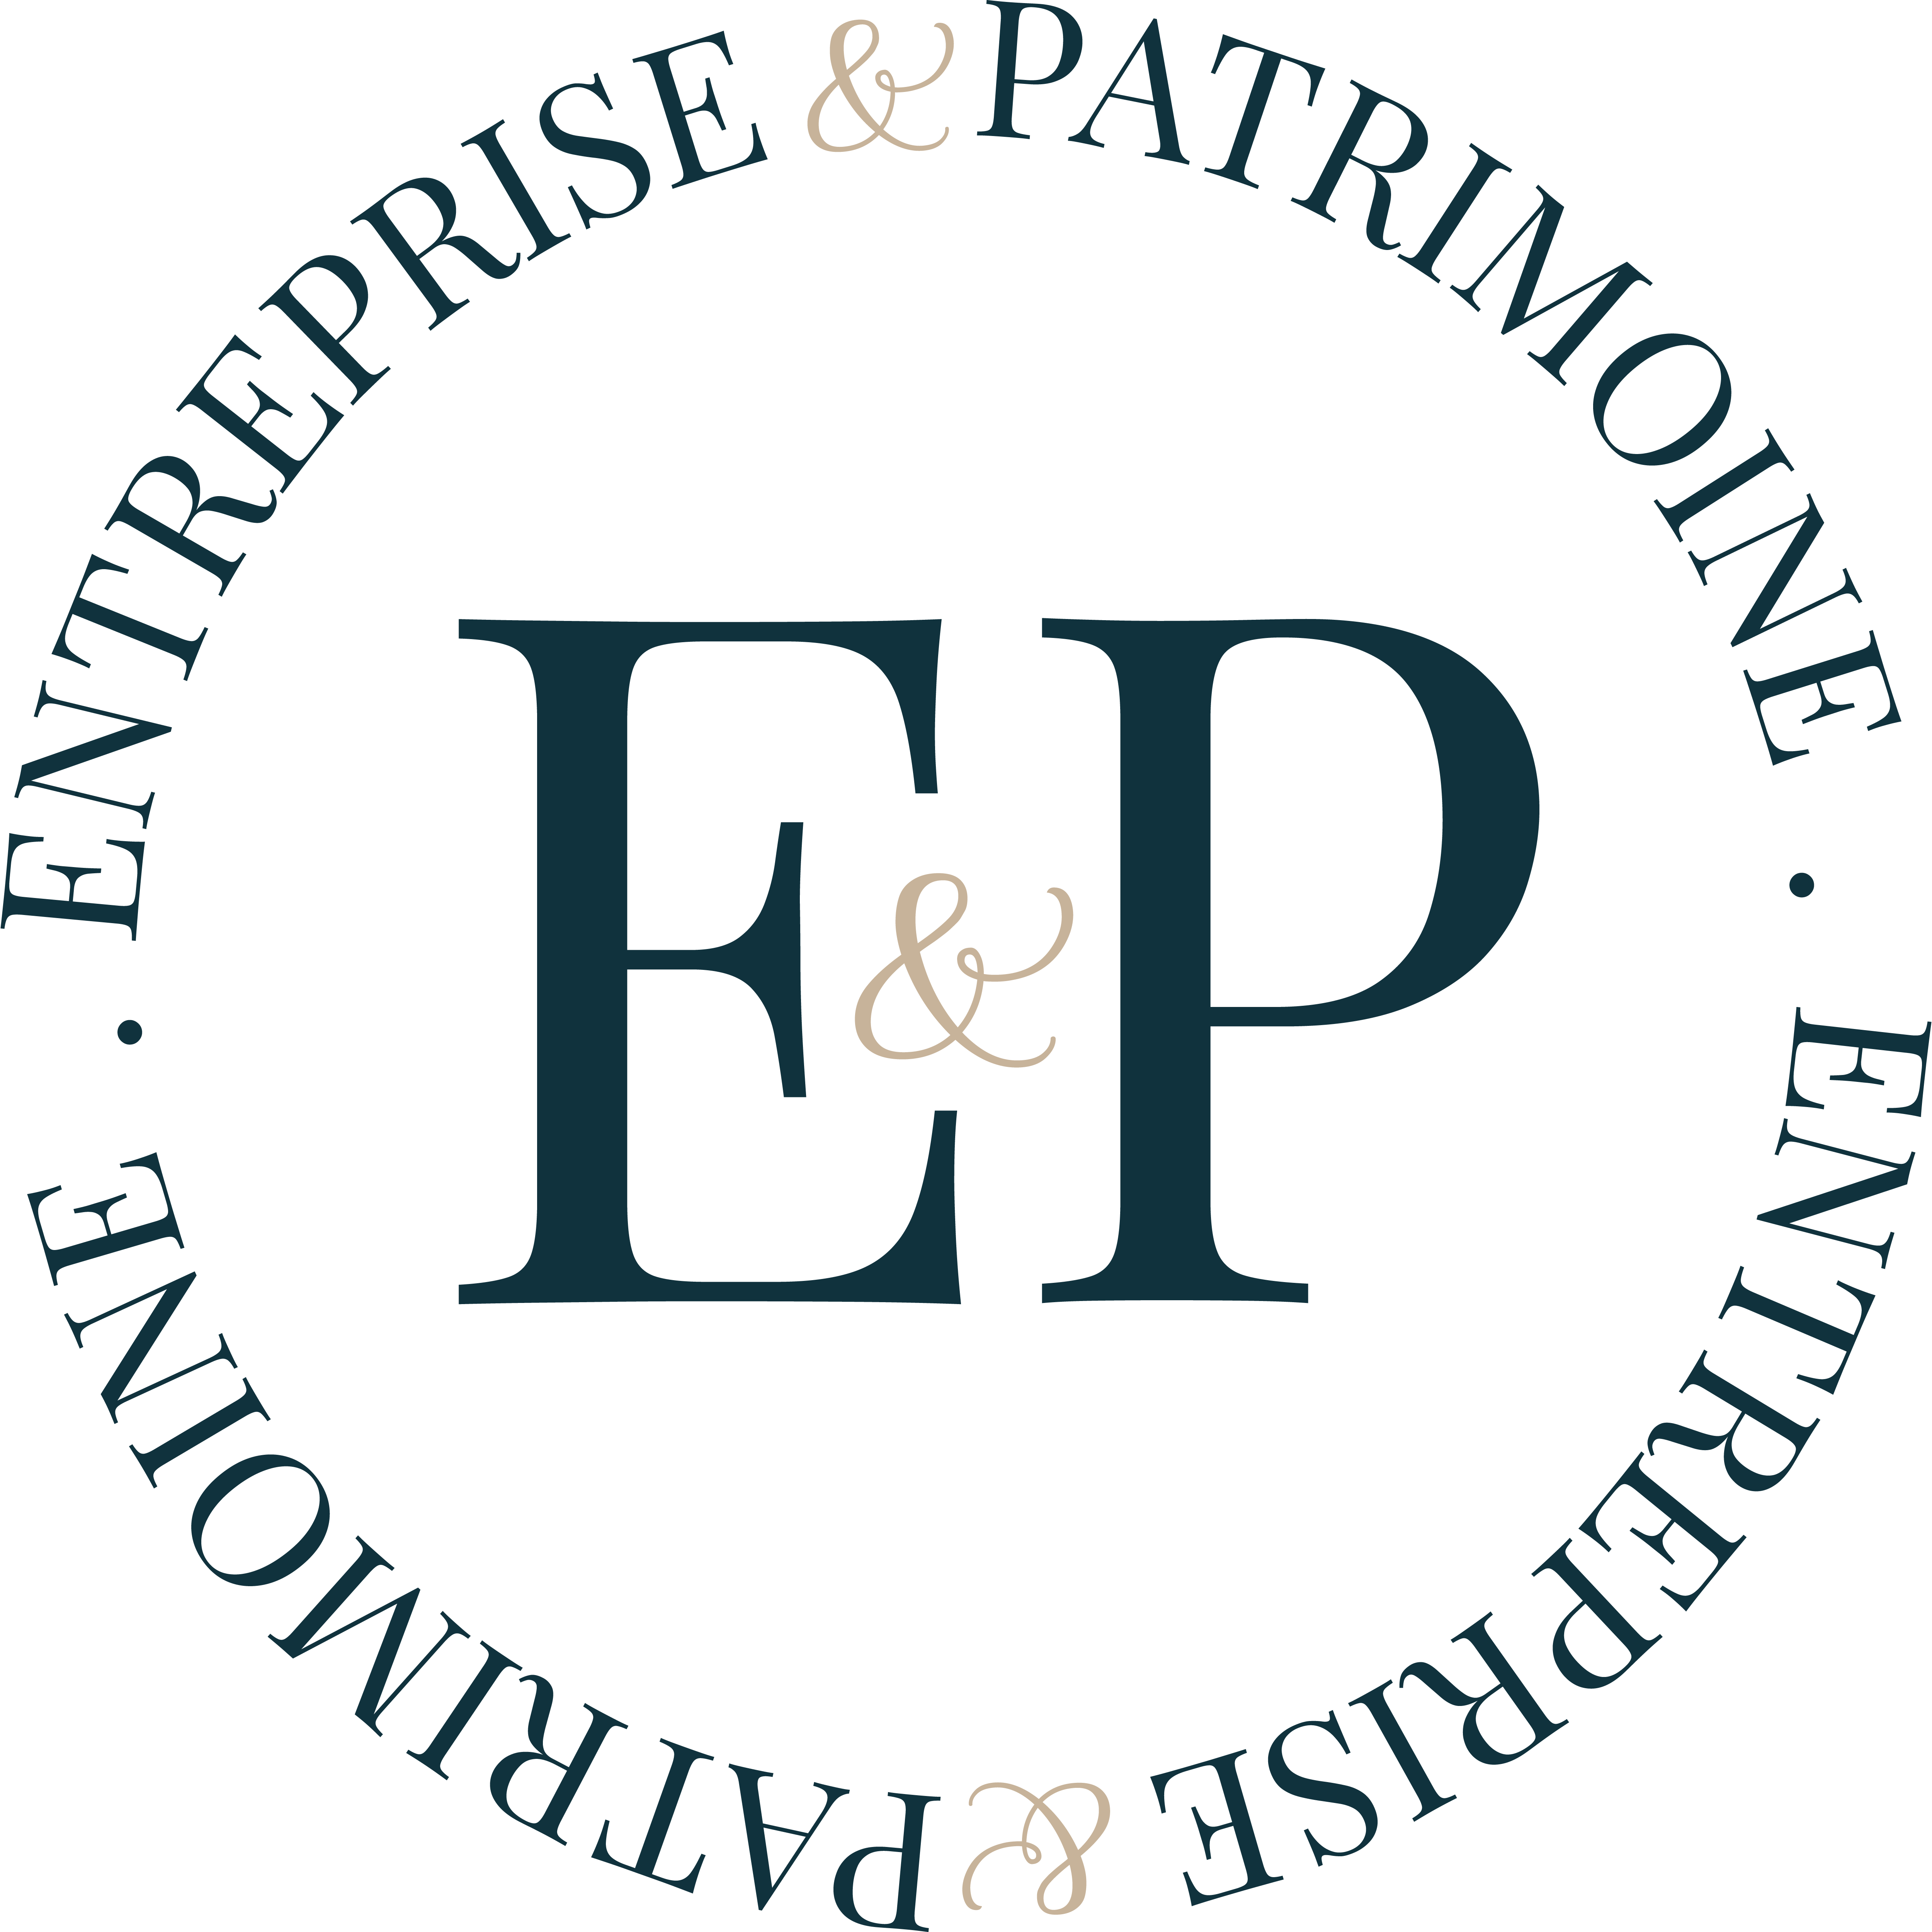 Entreprise & patrimoine logo